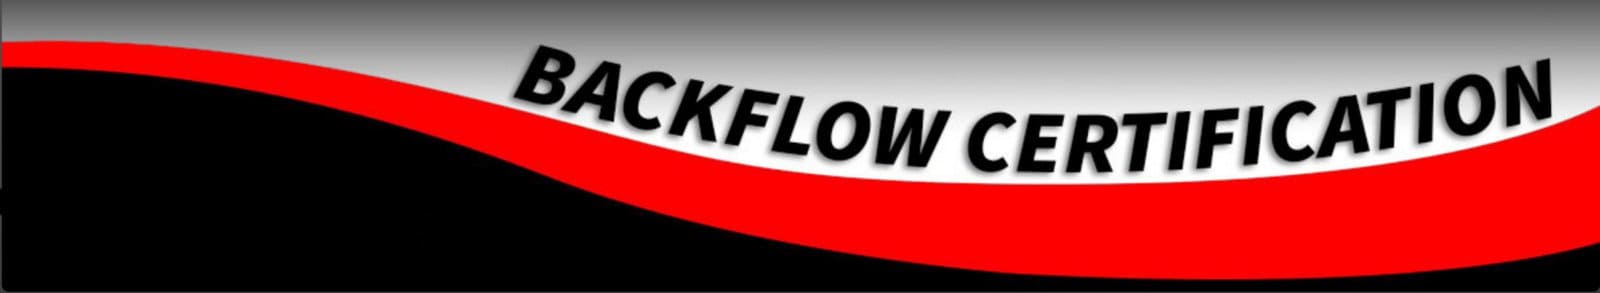 Backflow Certification ABC Backflow Certification